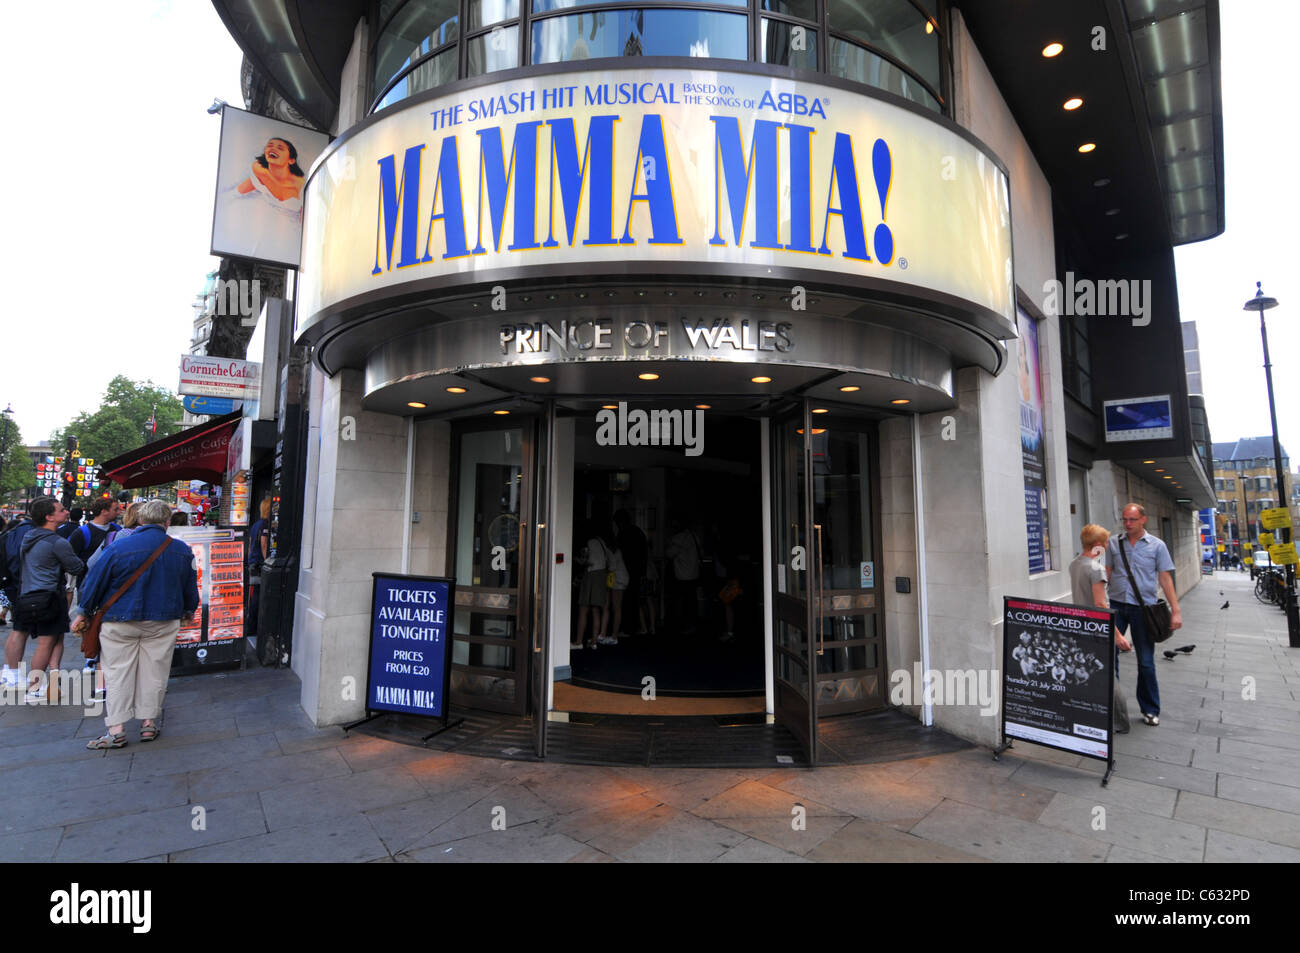 Prince of Wales Theatre, Mamma Mia!, London, Britain, UK Stock Photo